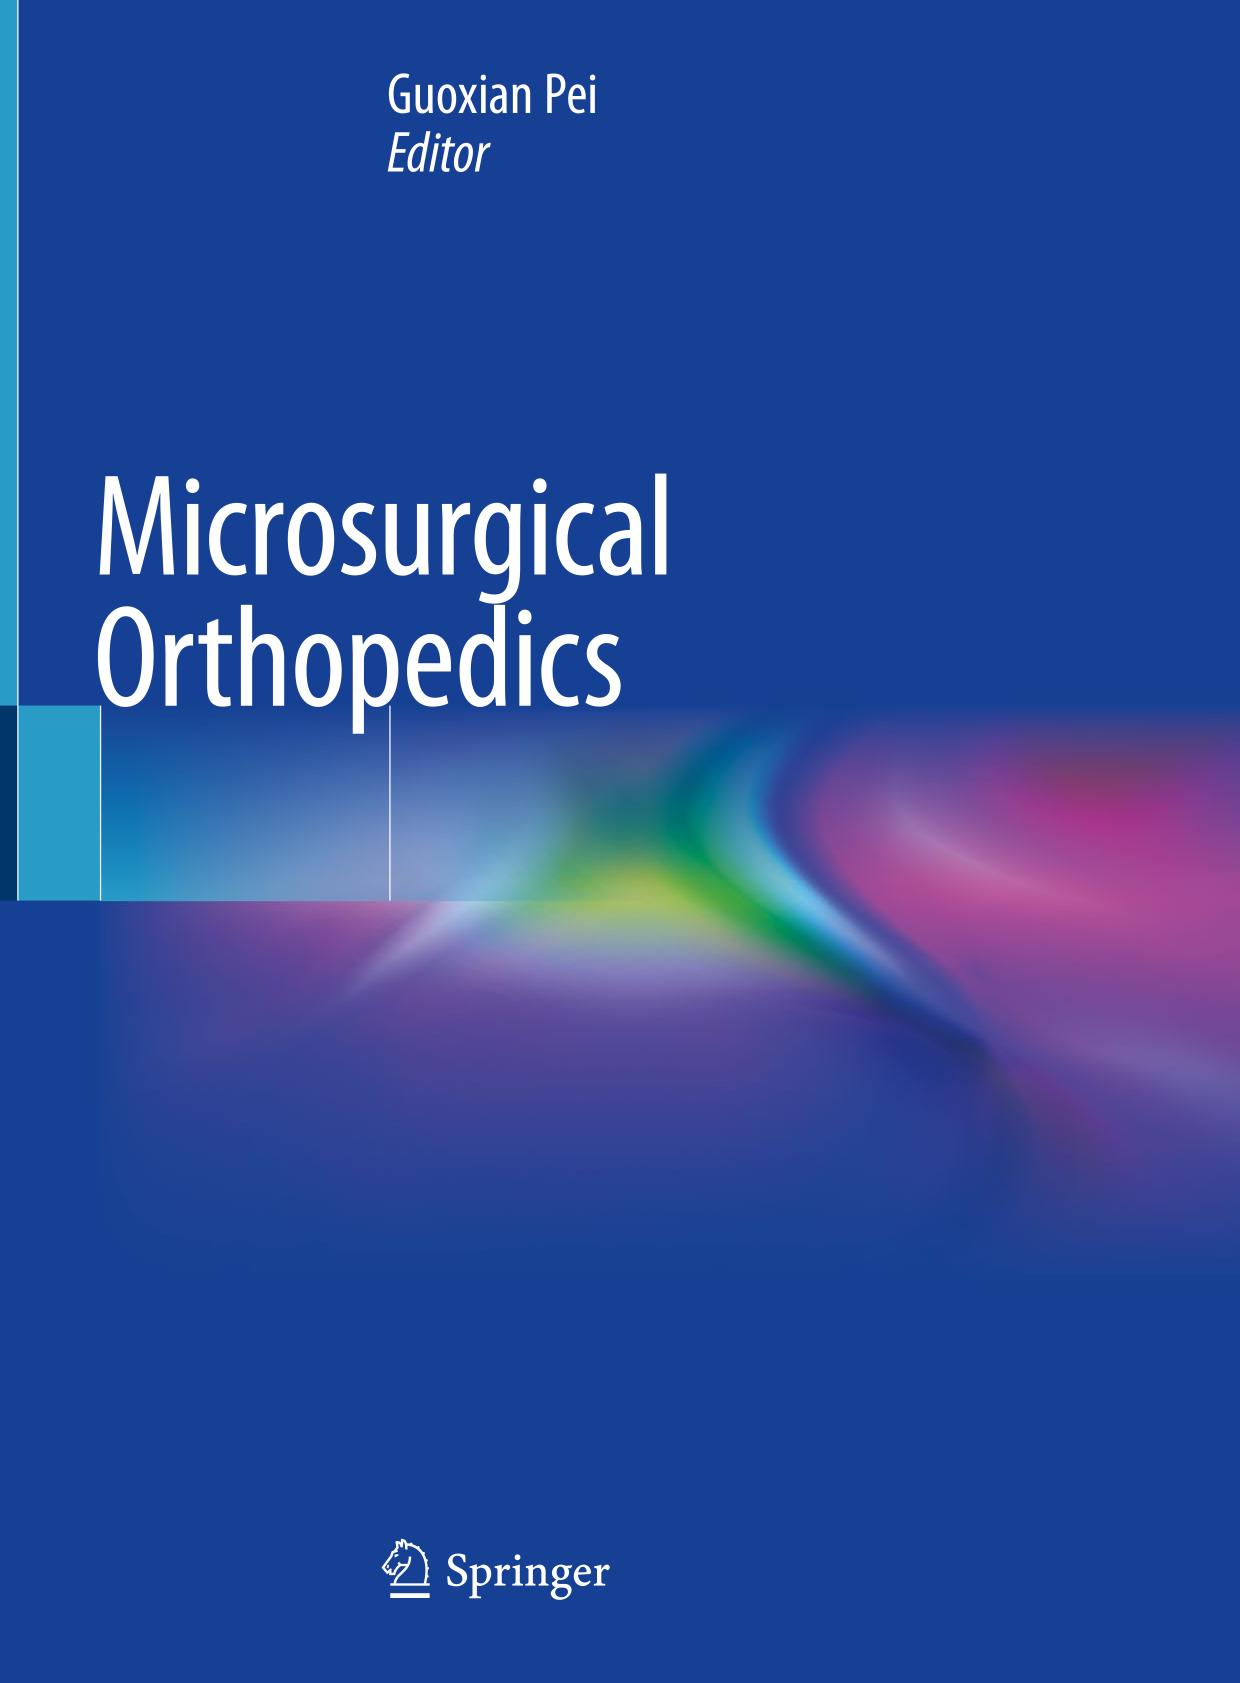 Microsurgical orthopedics